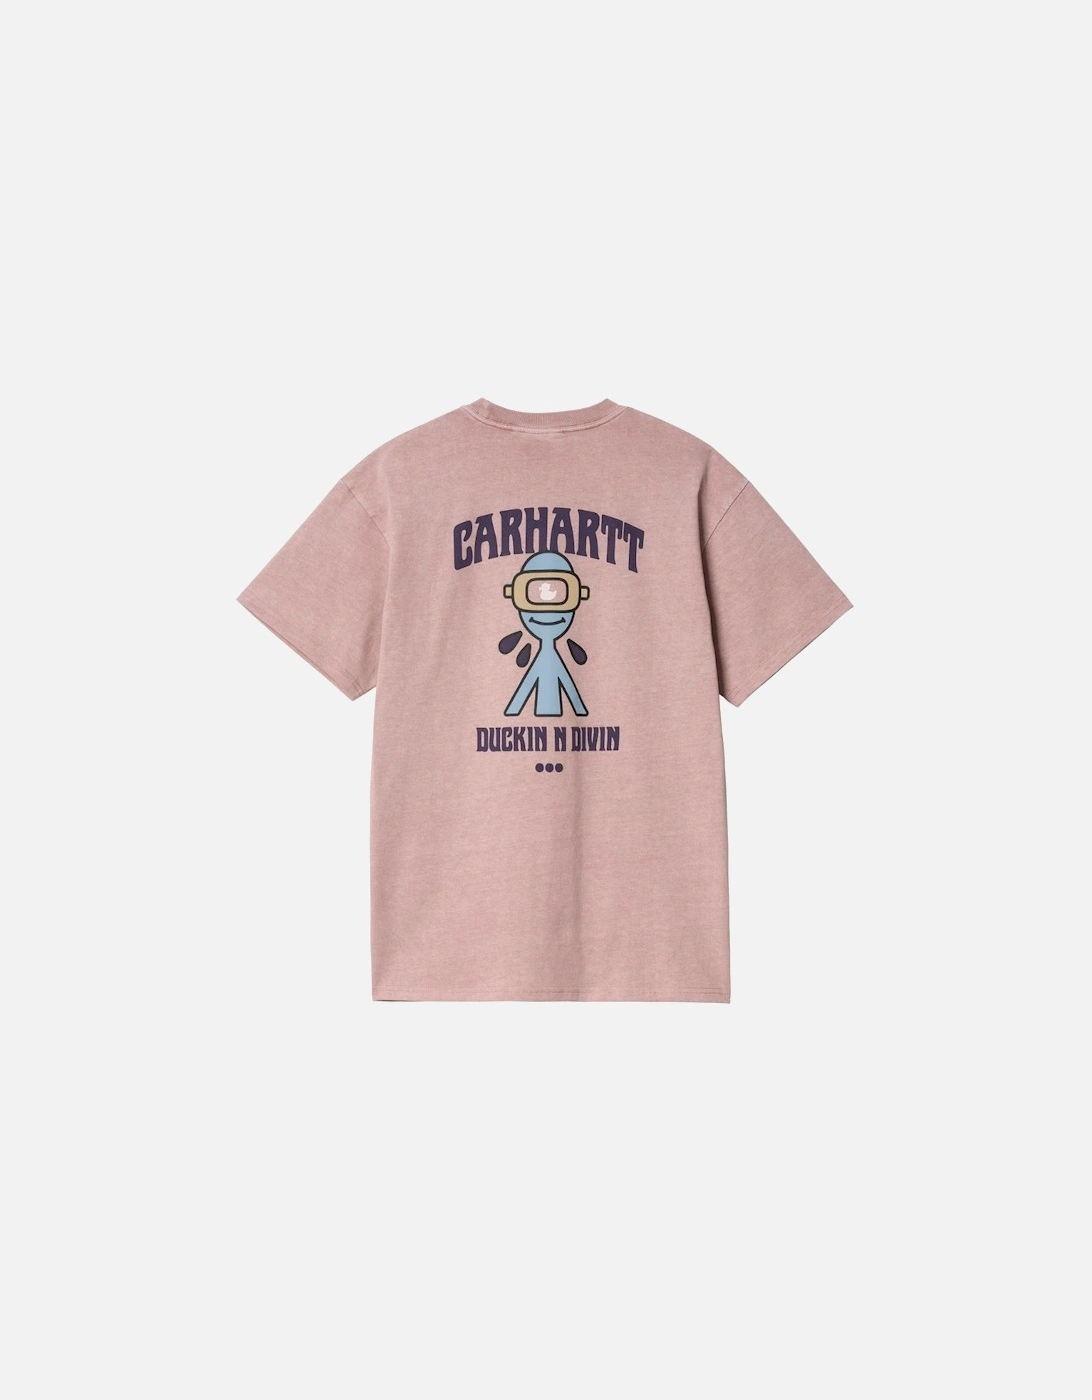 S/S Duckin' T-Shirt - Glassy Pink